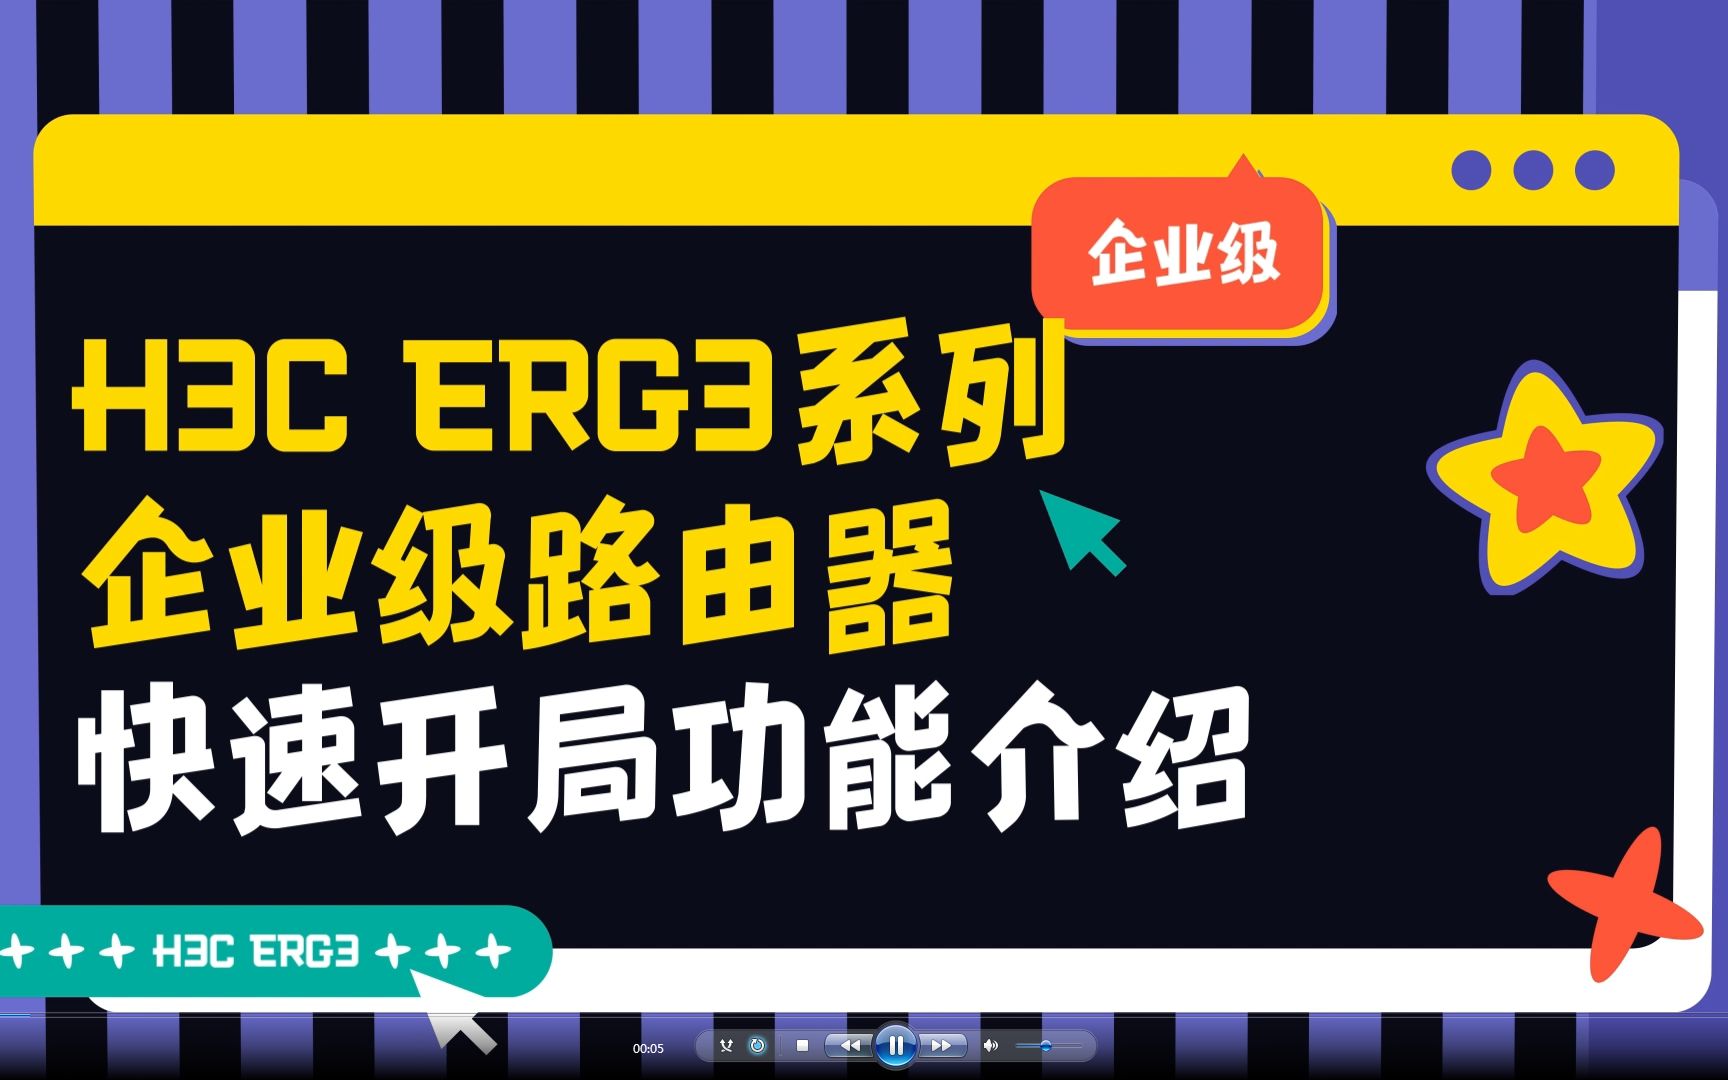 H3C ER G3系列路由器 快速开局功能介绍视频